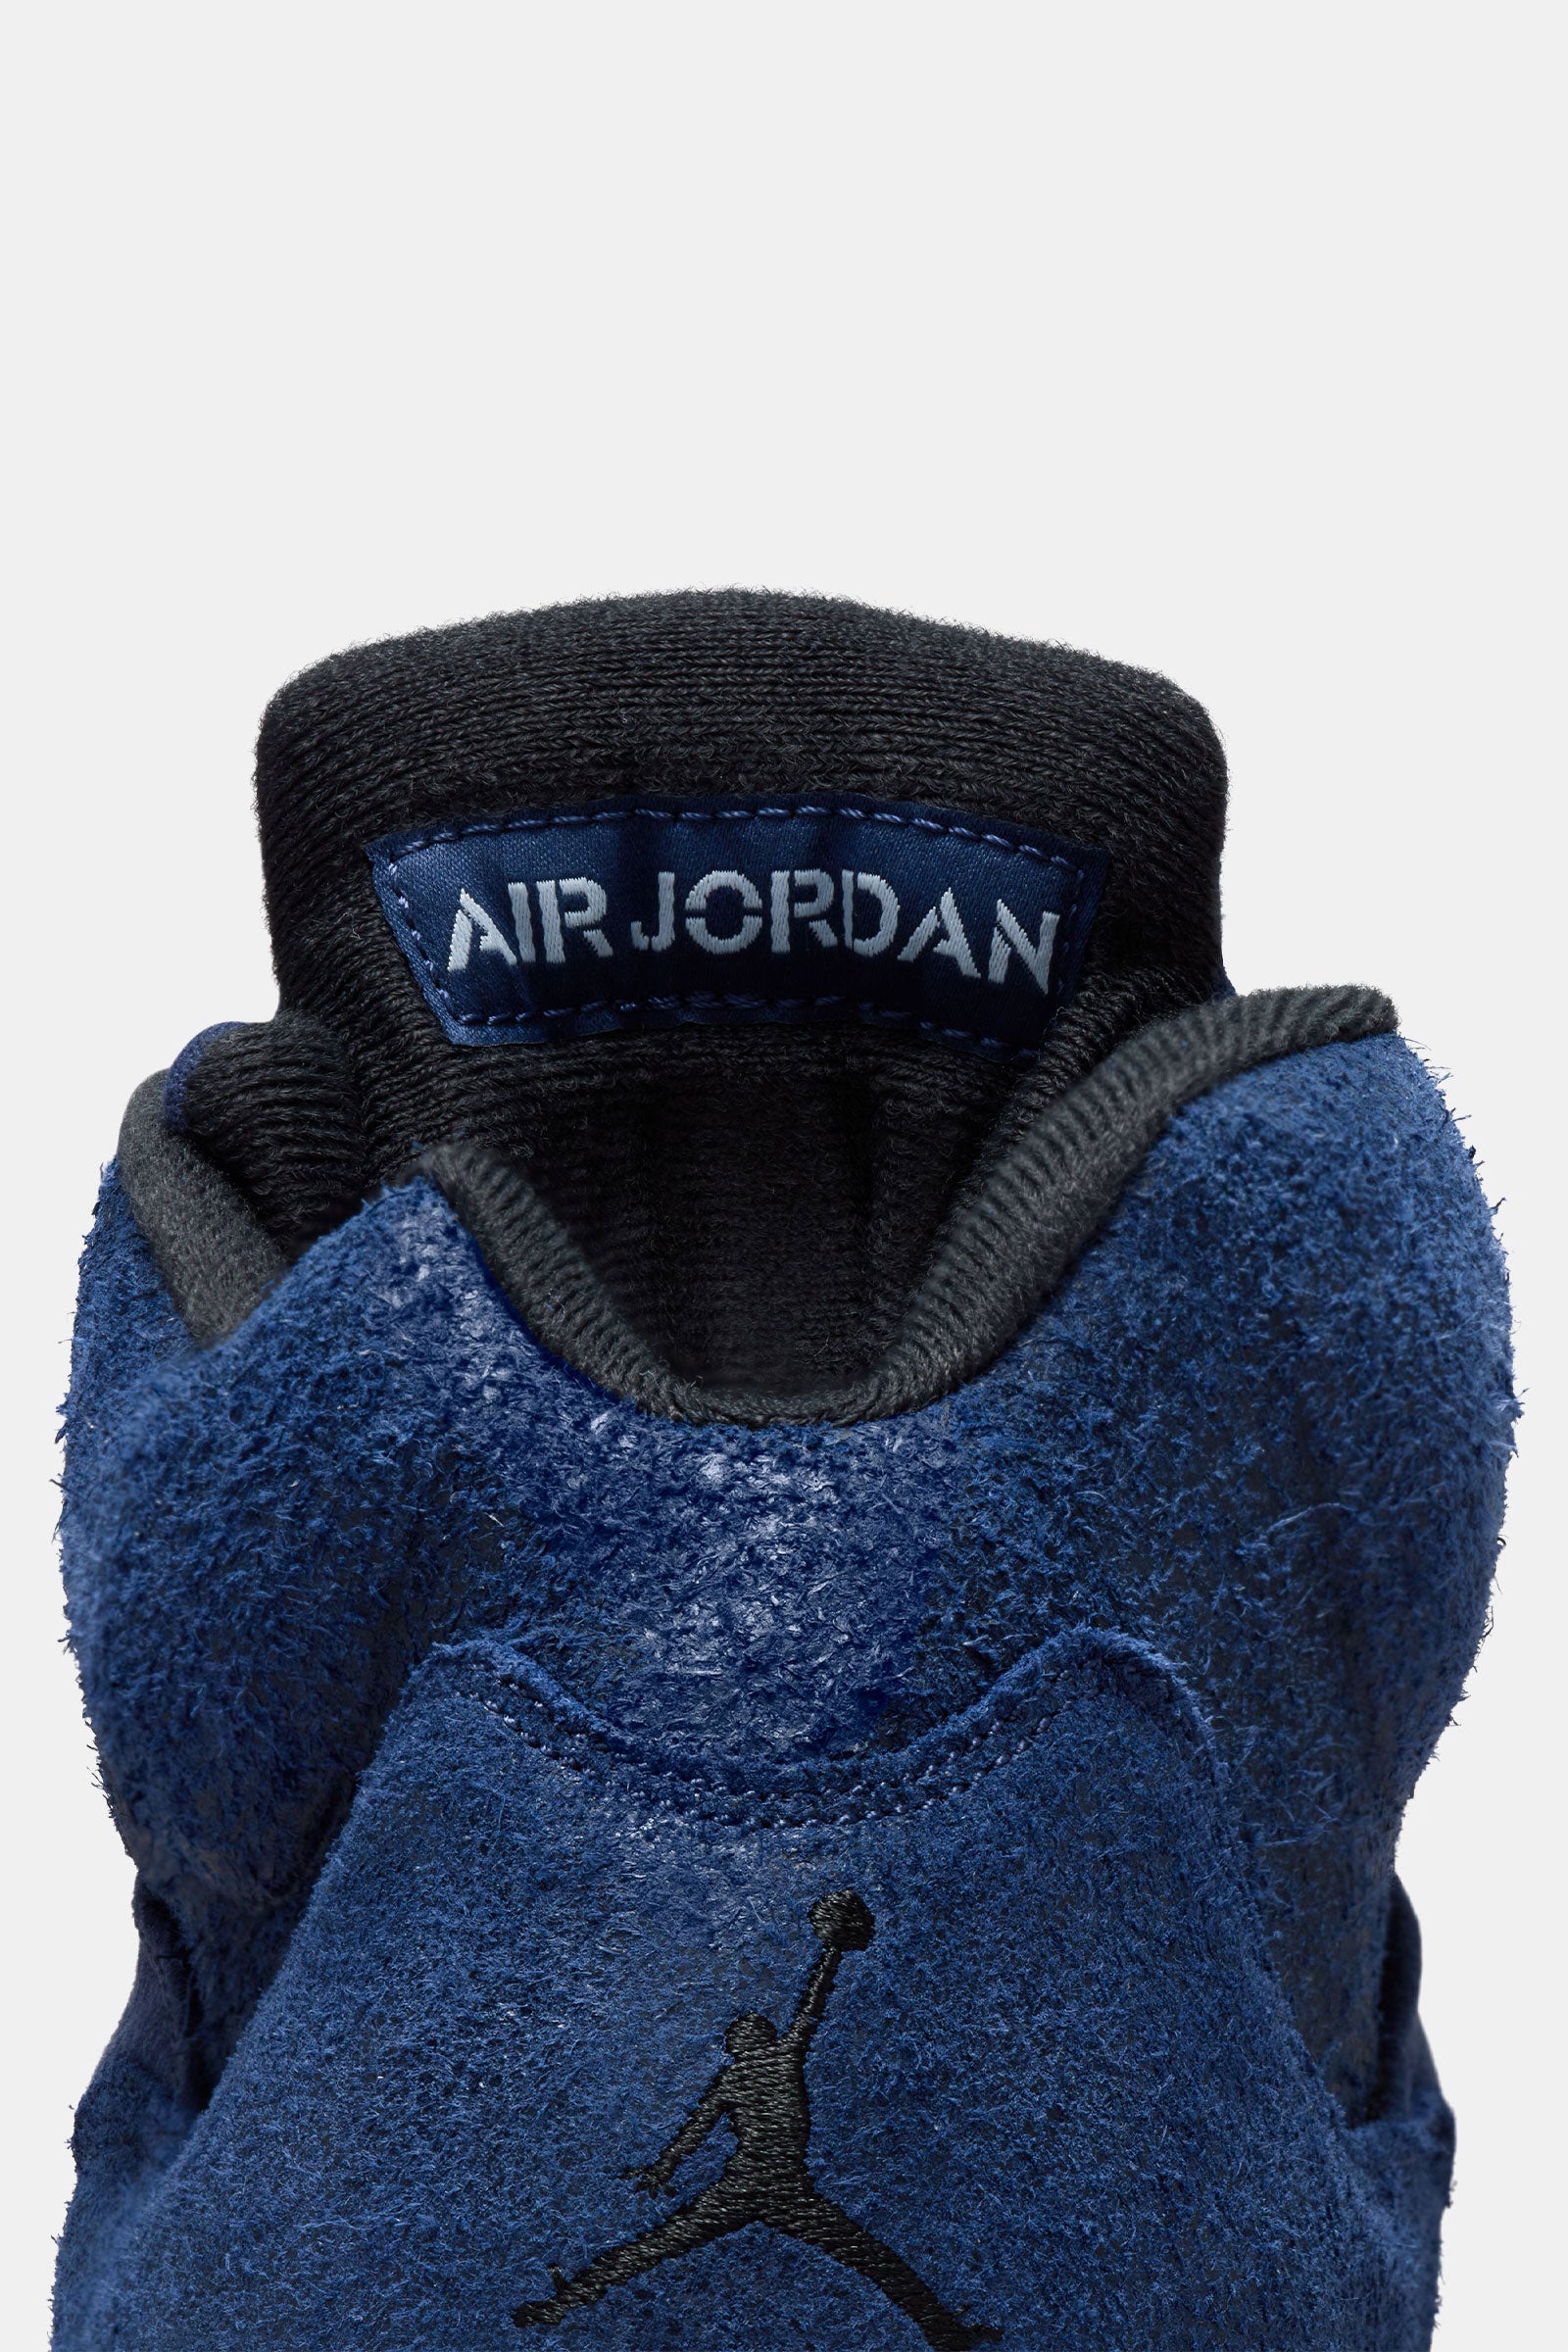 Air Jordan Retro 5 SE